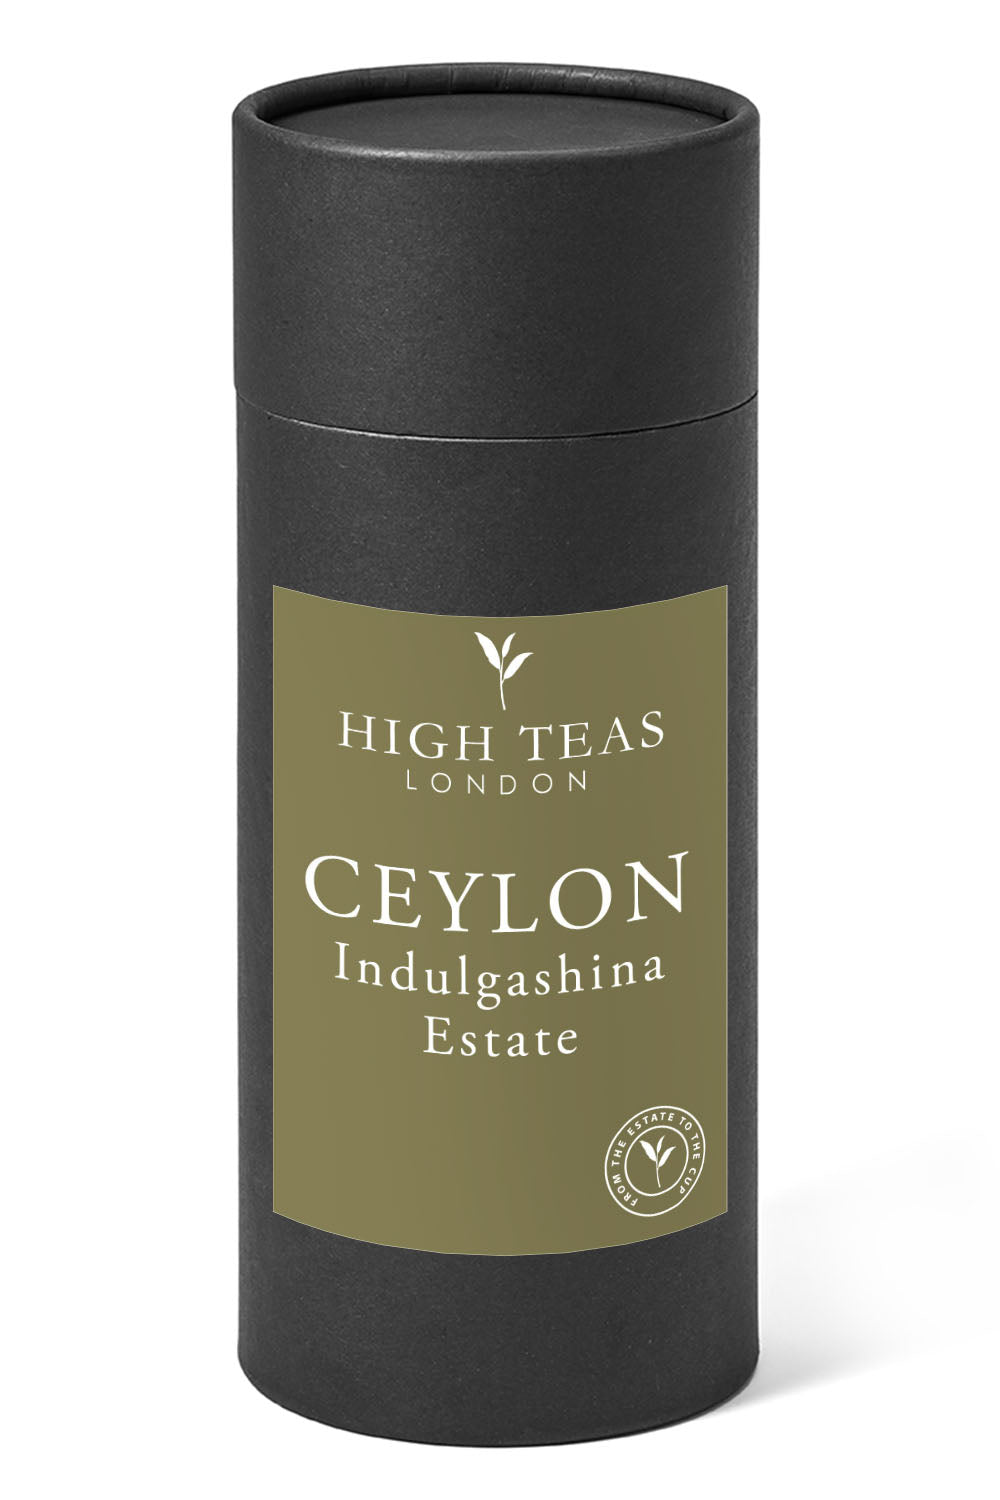 Uva OP Green Organic, Indulgashina Estate-150g gift-Loose Leaf Tea-High Teas